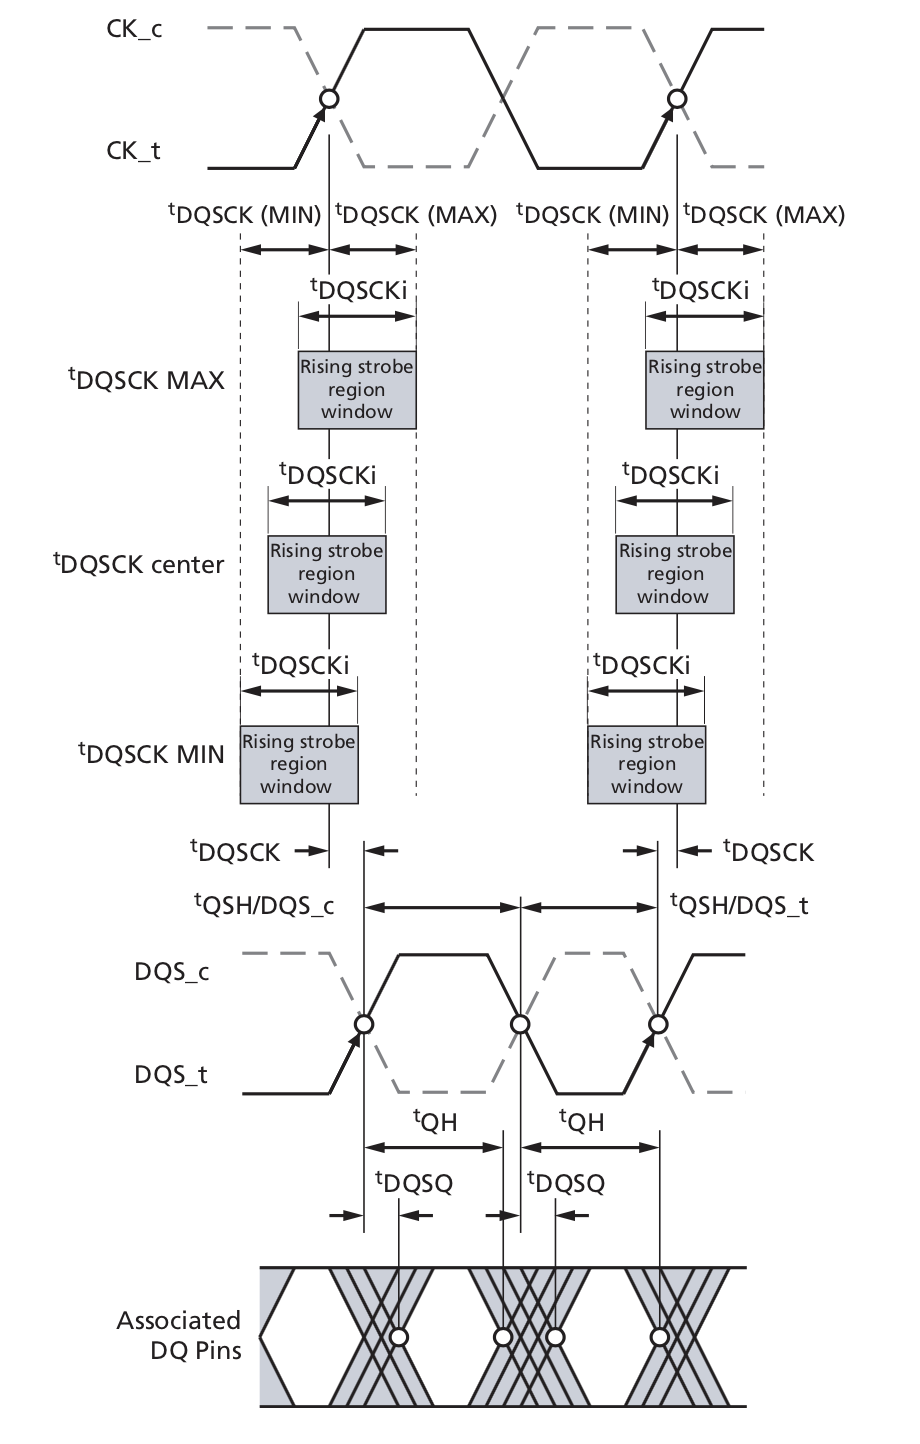 Figure 8: Illustrating CK-DQS and DQS-DQ relationships